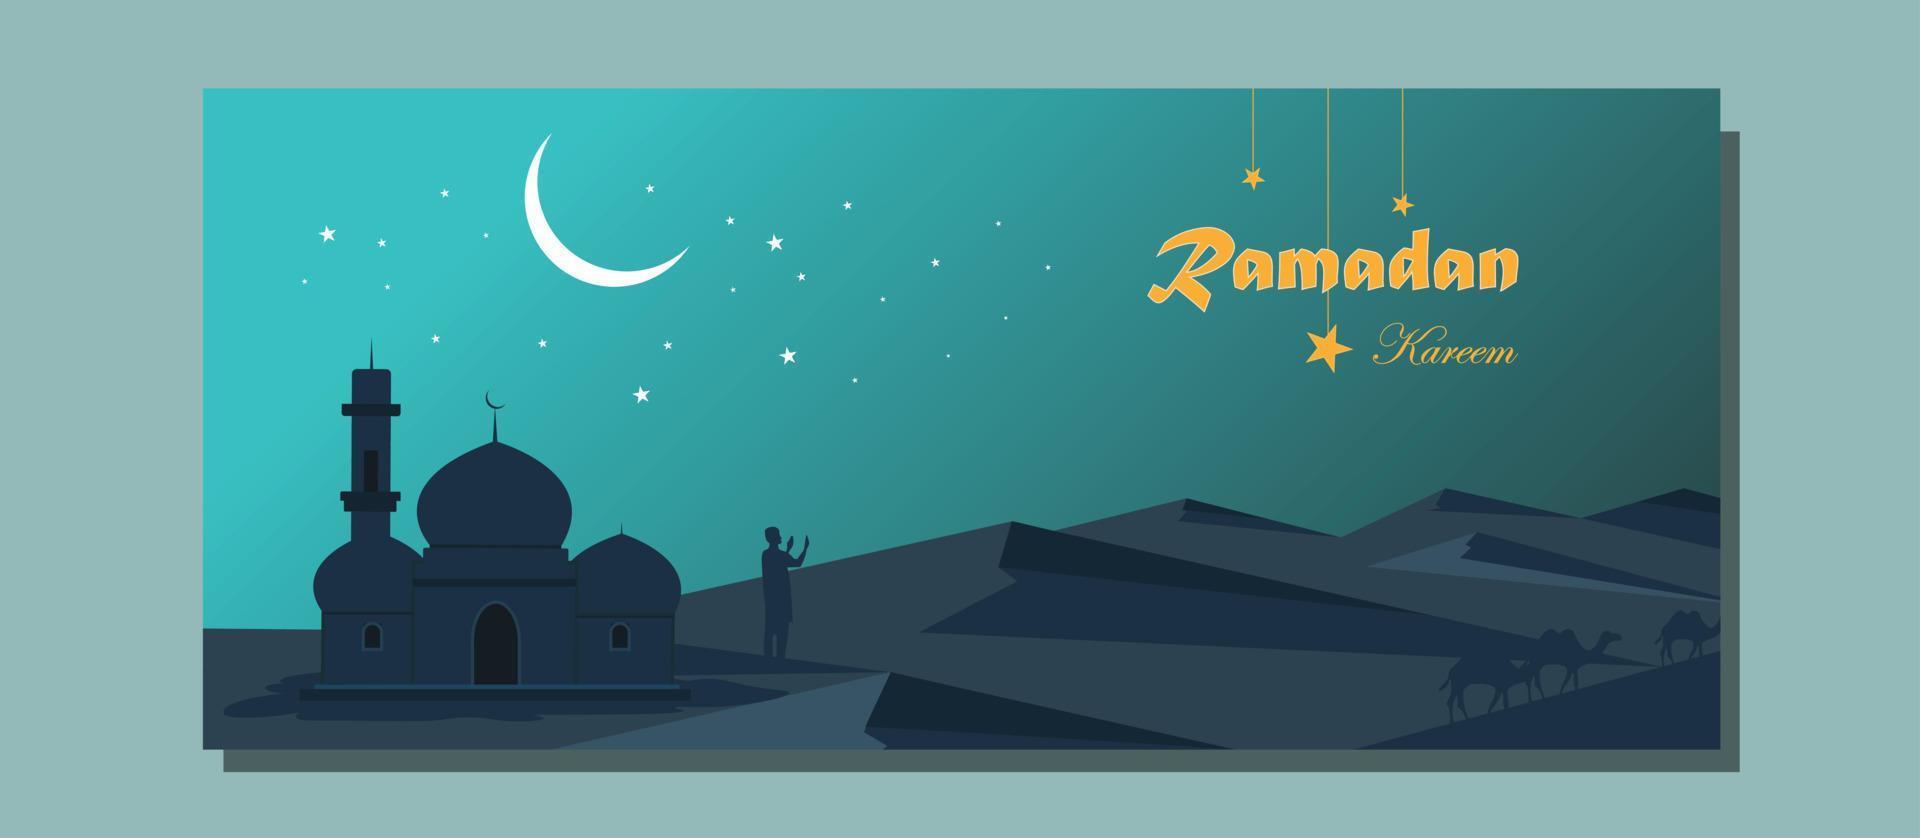 ramadan kareem gruß islamisches illustrationshintergrundvektordesign mit landschaftsvektor vektor